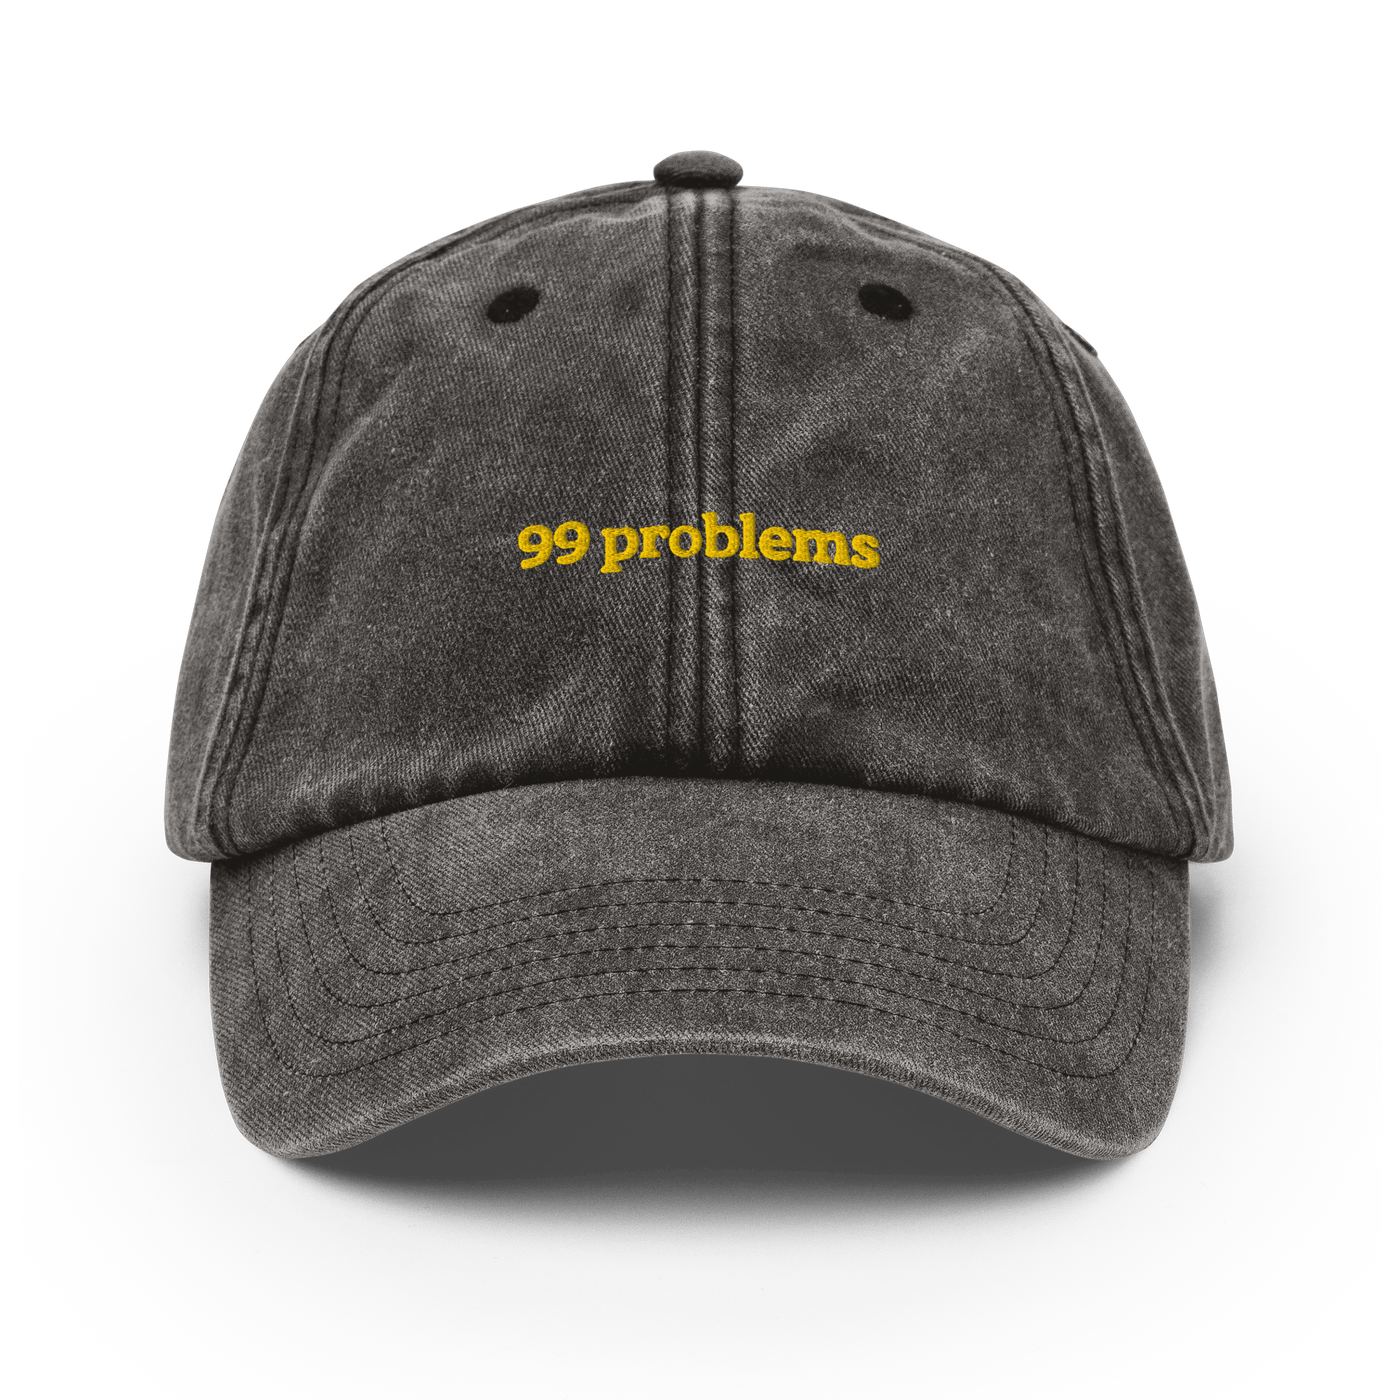 99 problems Vintage Hat - Vintage Black - - Just Another Cap Store